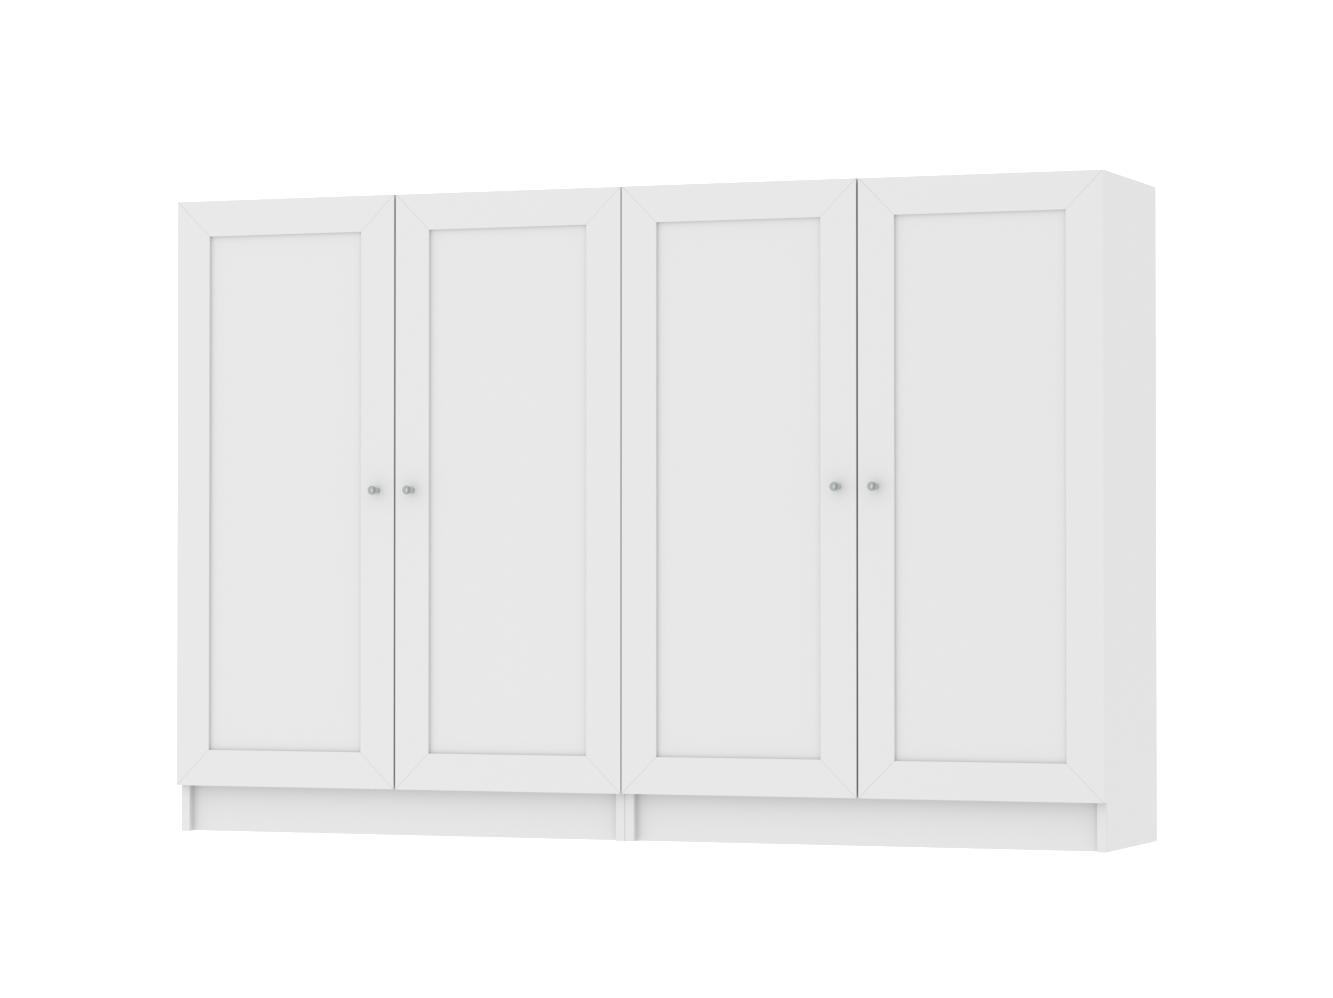 Изображение товара Комод Билли 216 white ИКЕА (IKEA), 160x30x106 см на сайте adeta.ru